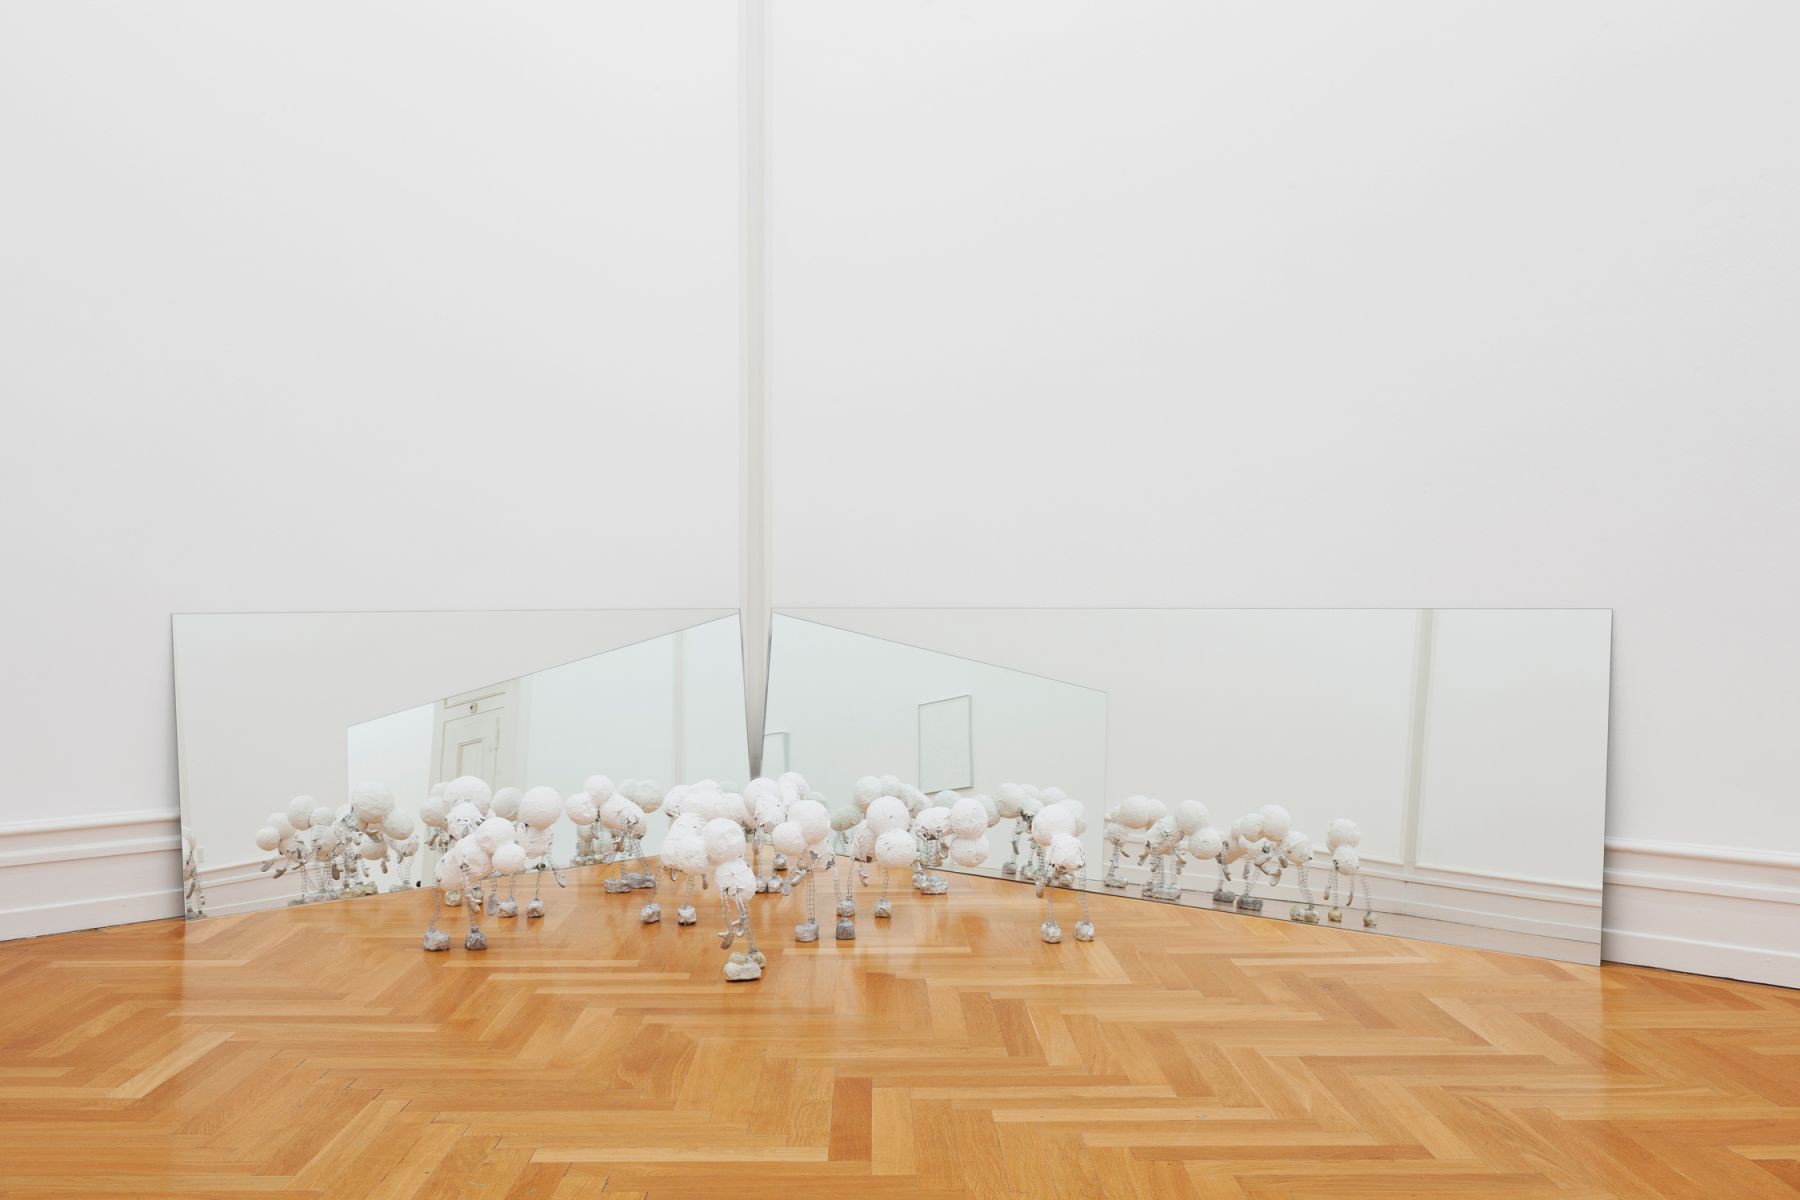 Installation view, I Shrunk the Kids, Kunsthalle Bern, 2013, Photo: Gunnar Meier